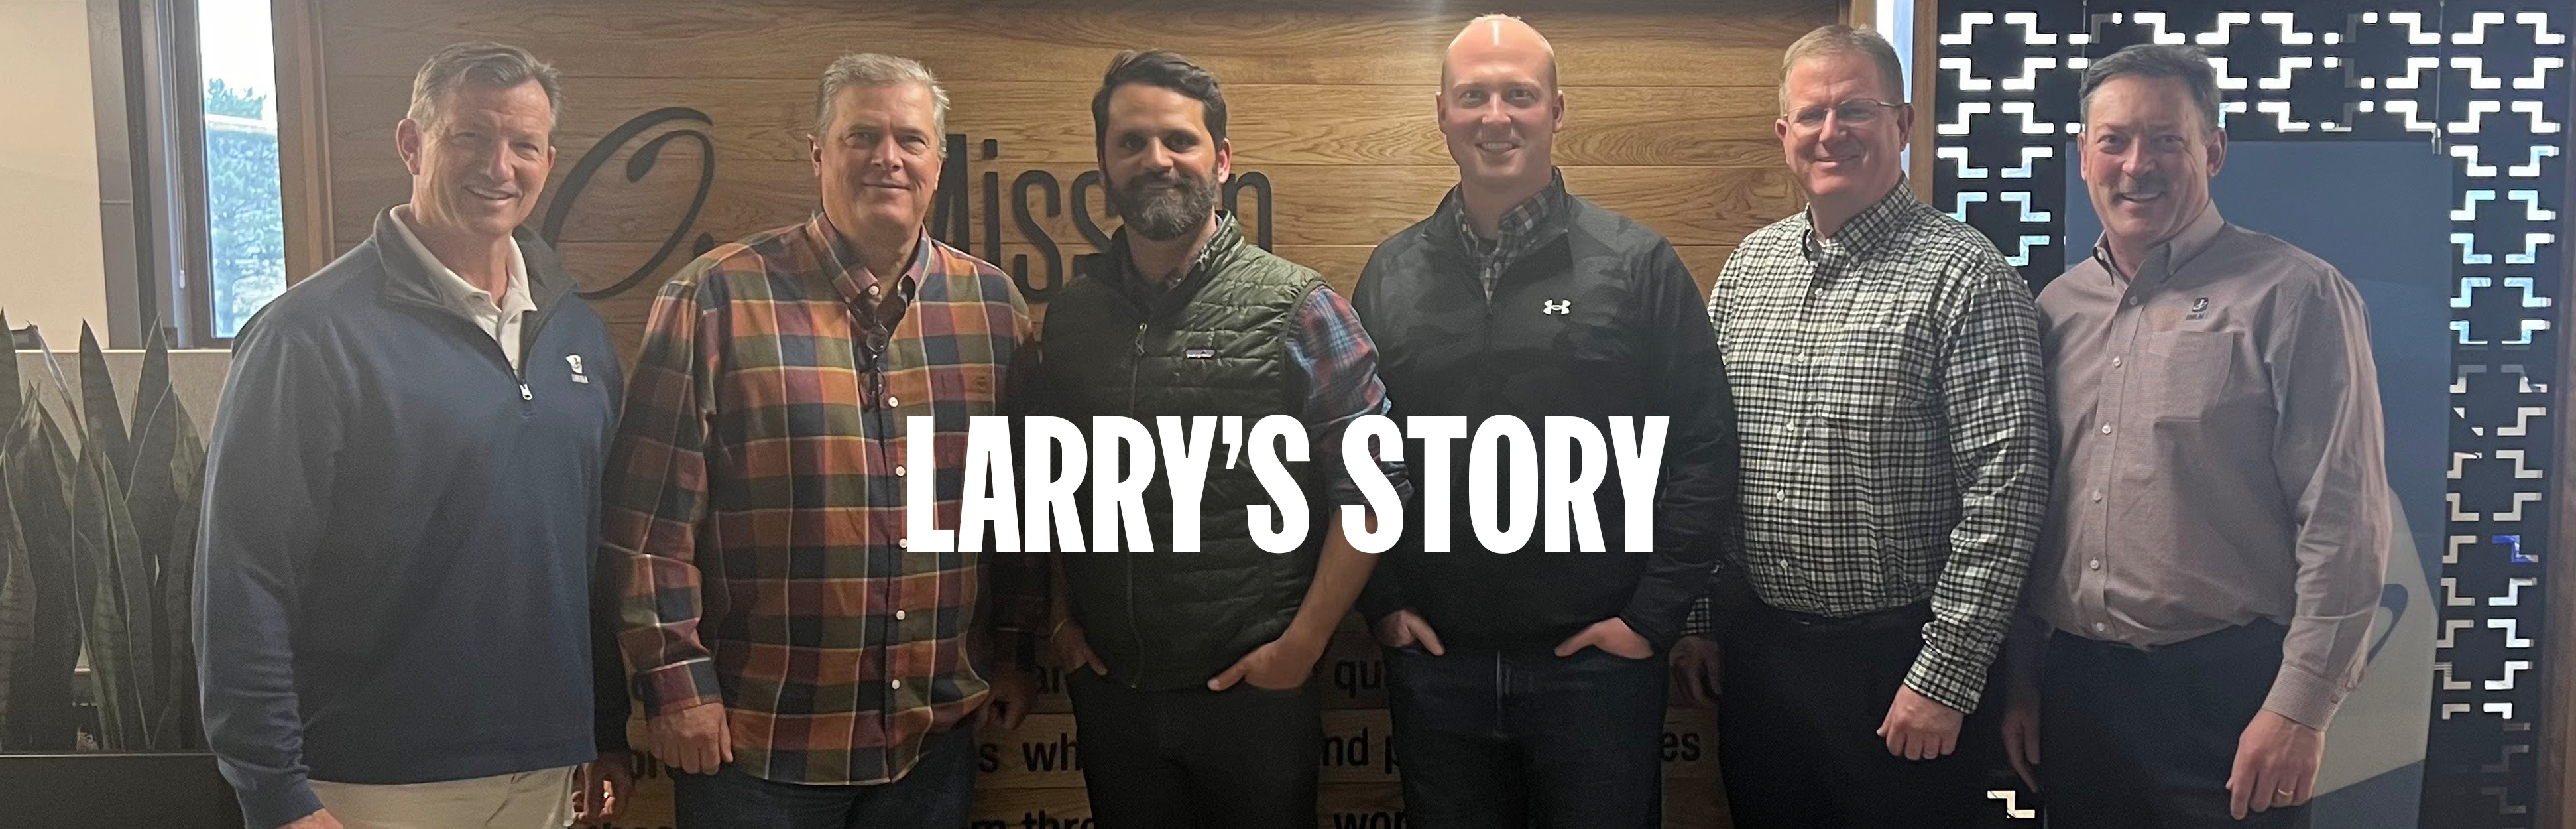 Larry's Story